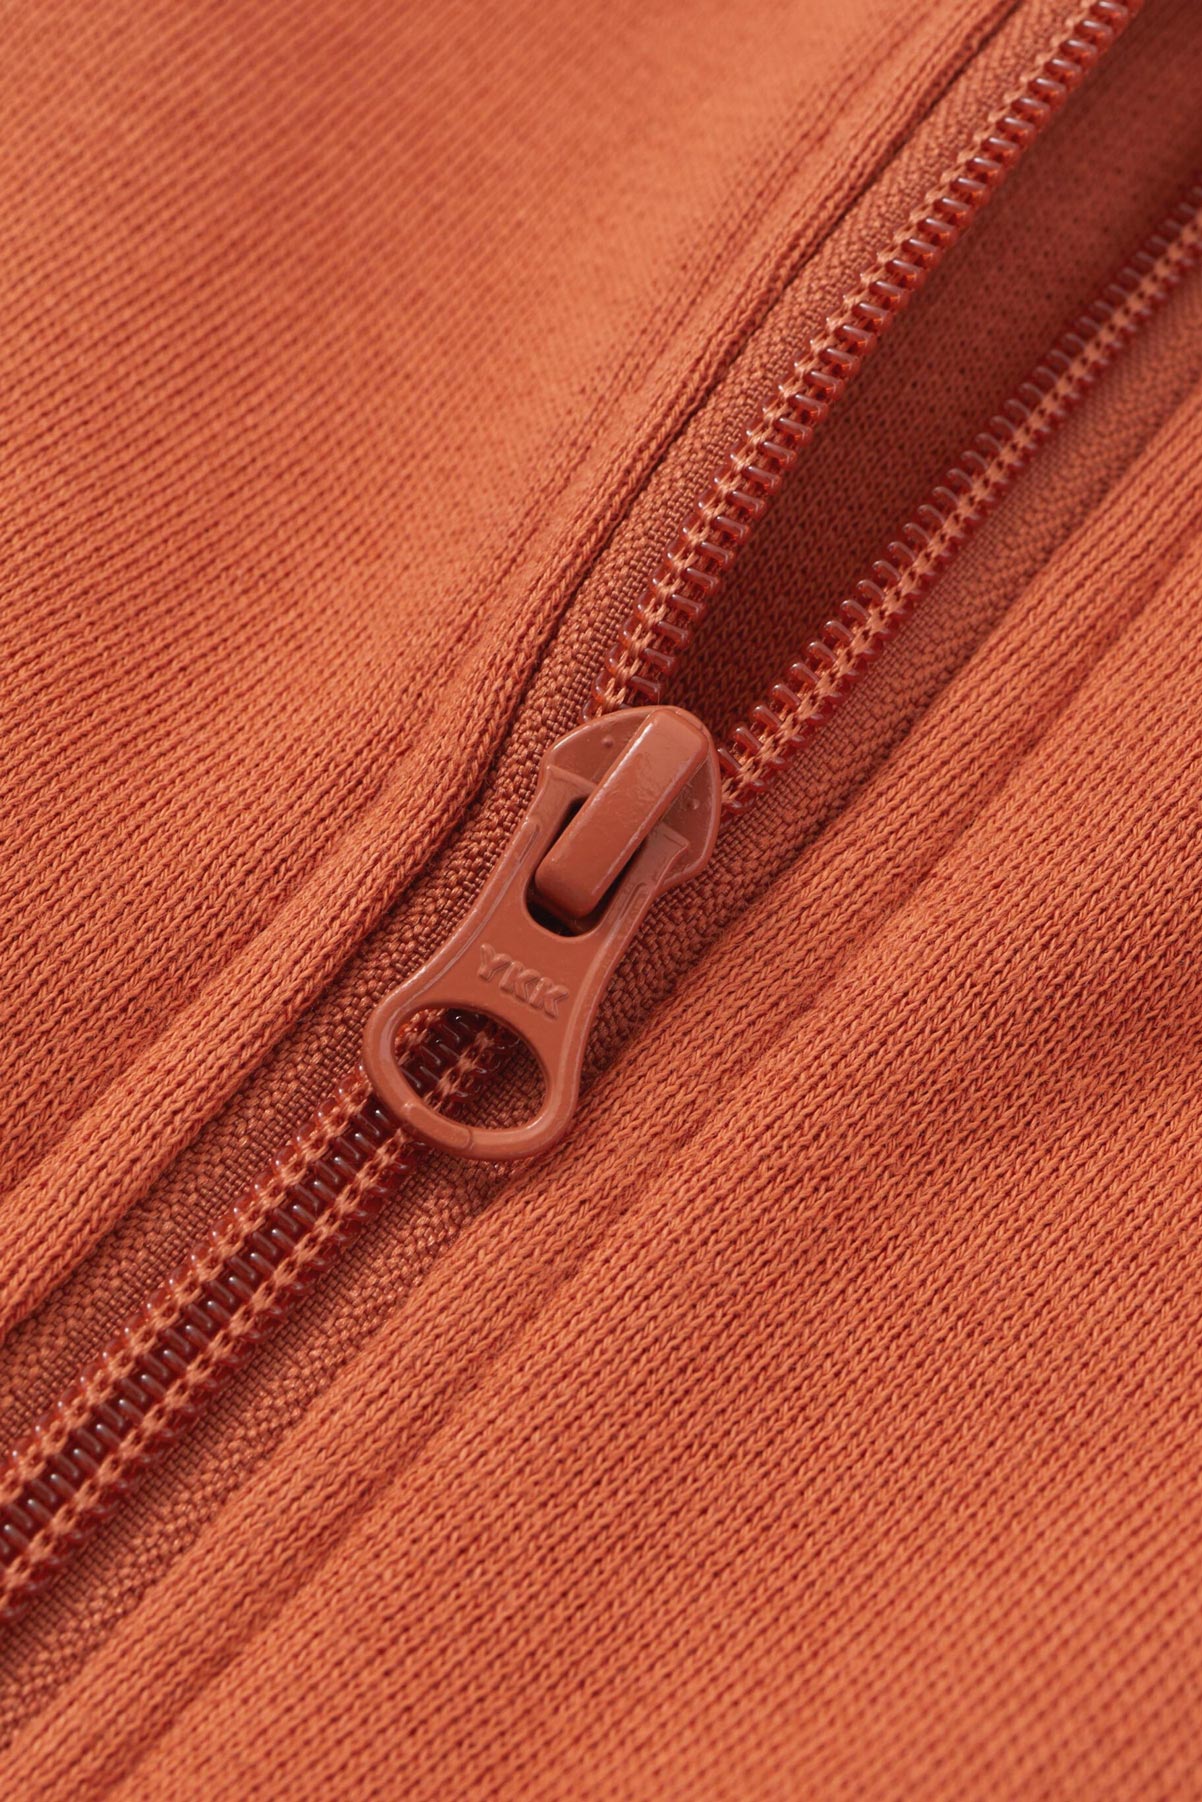 Ykk zip of Toddler Organic Fleece Hooded Jacket-Rust